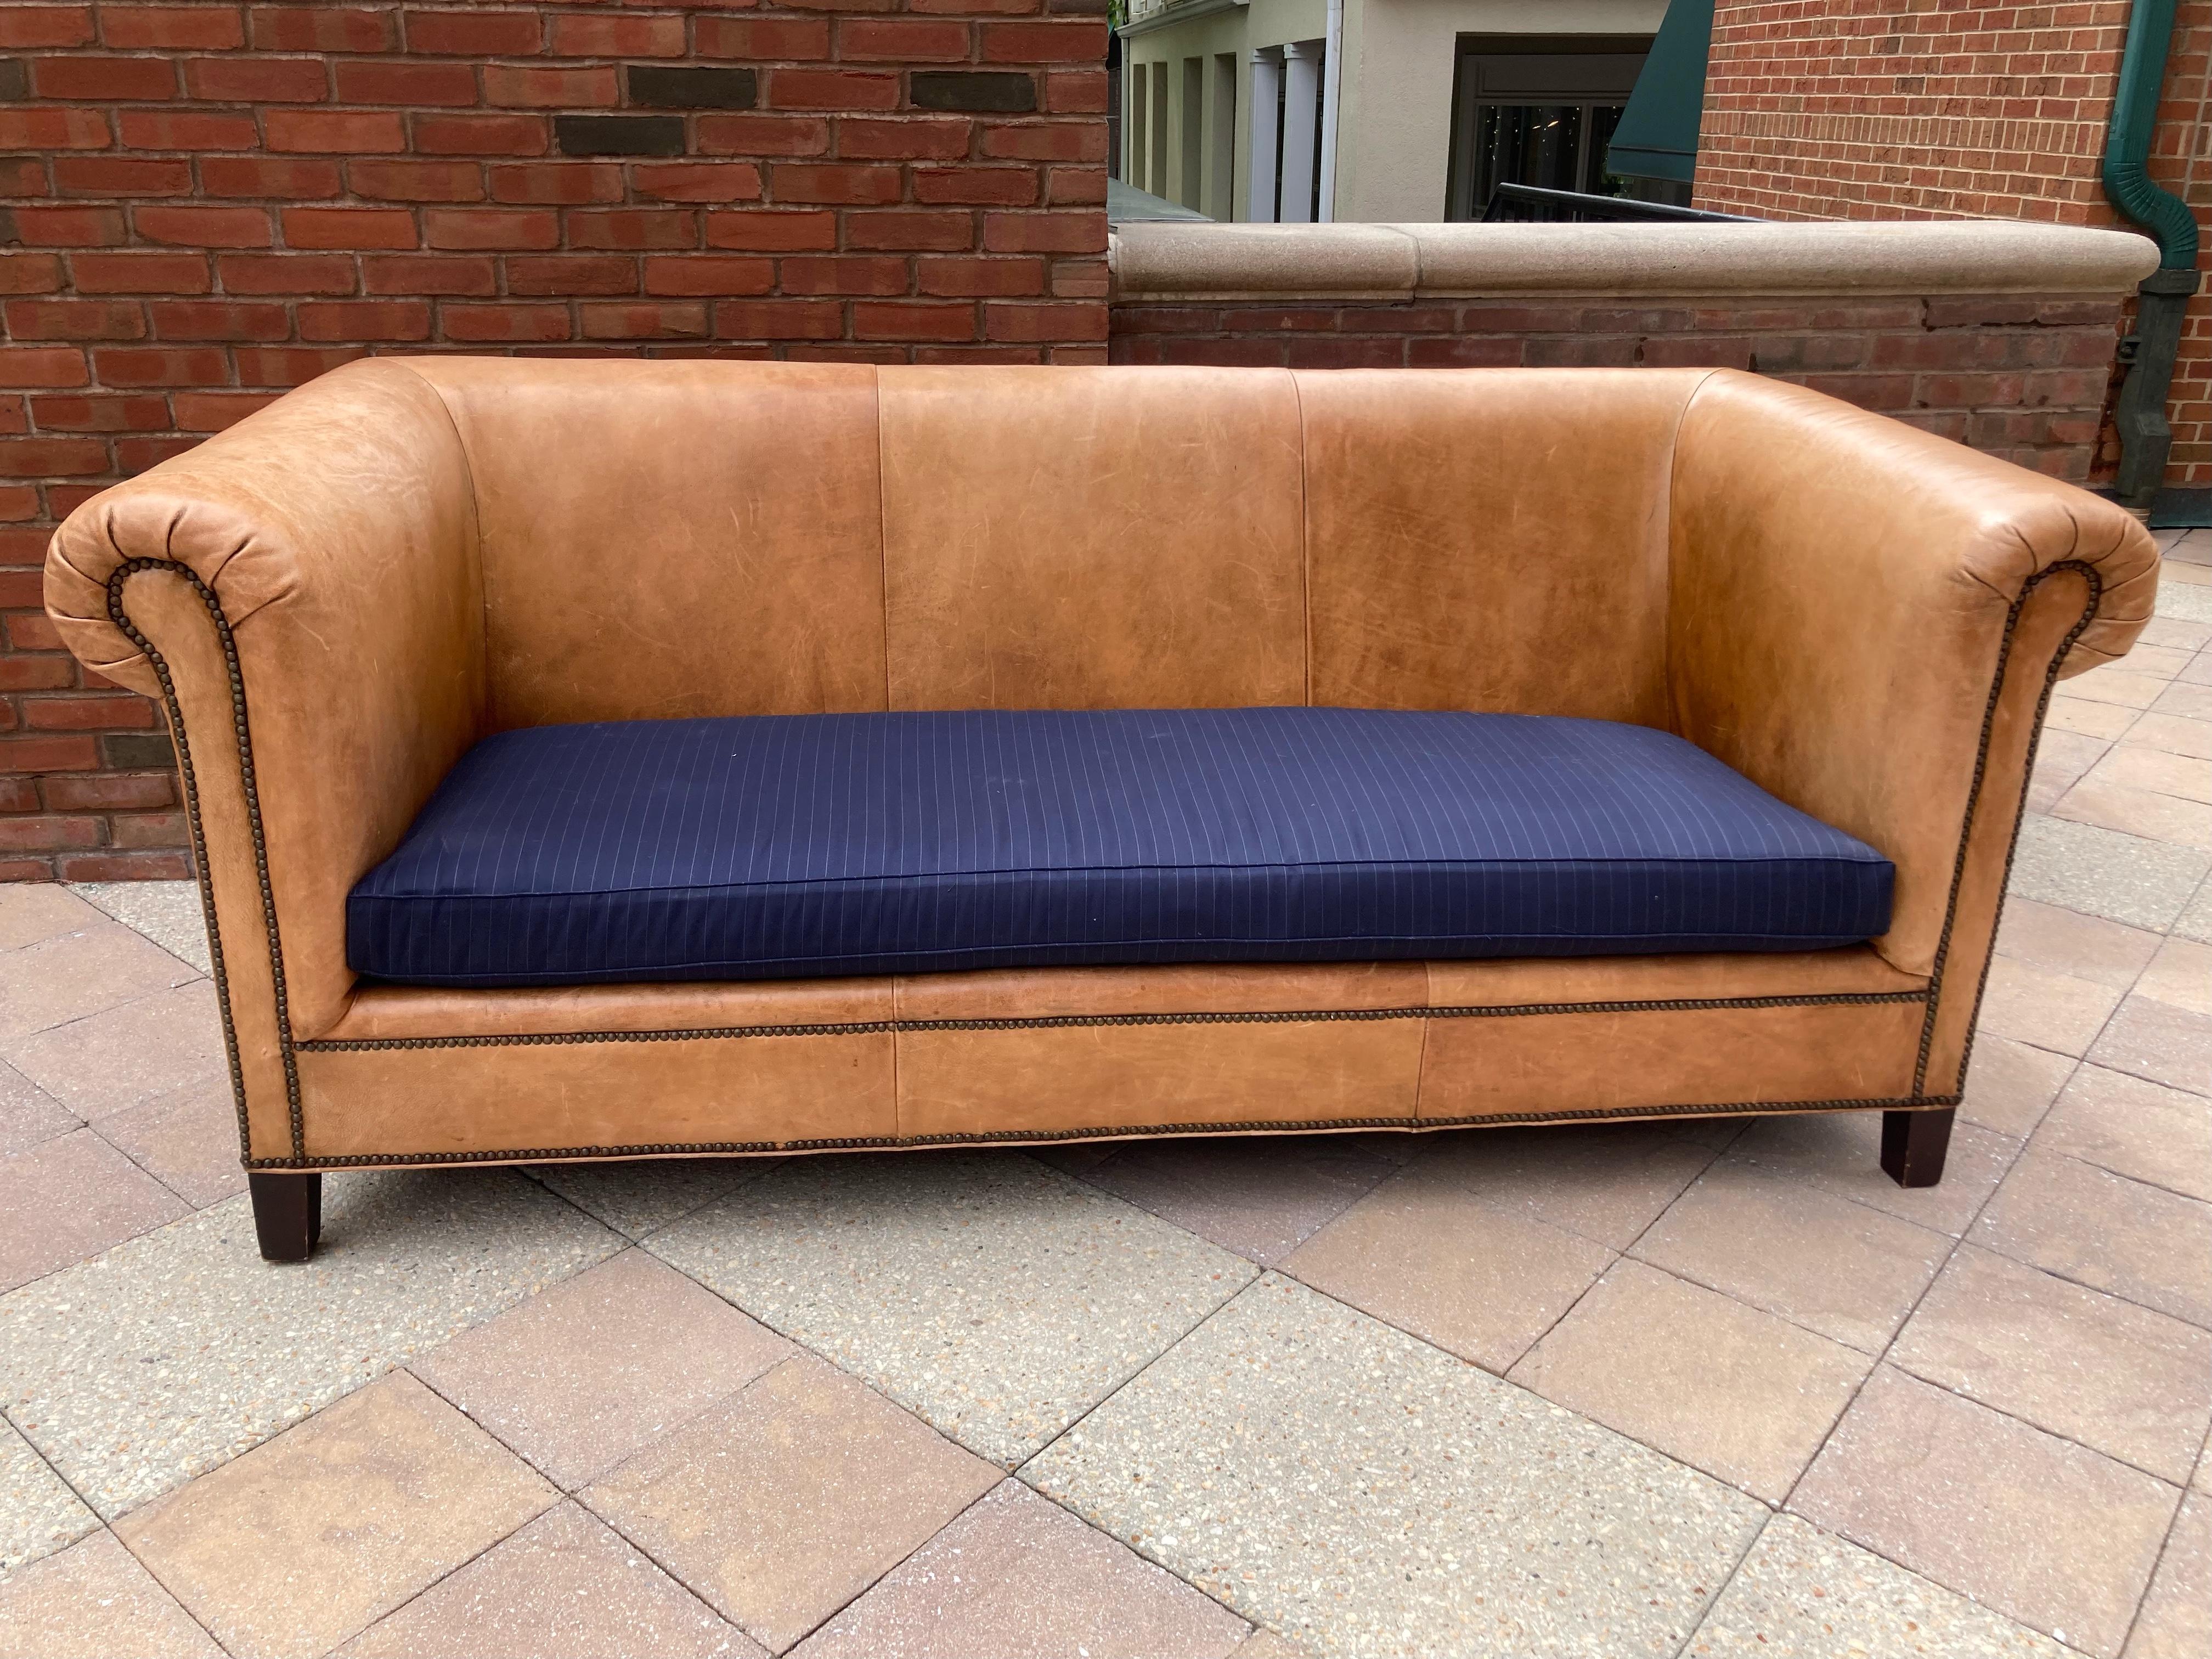 Ralph Lauren Brompton Sofa - 2 For Sale on 1stDibs